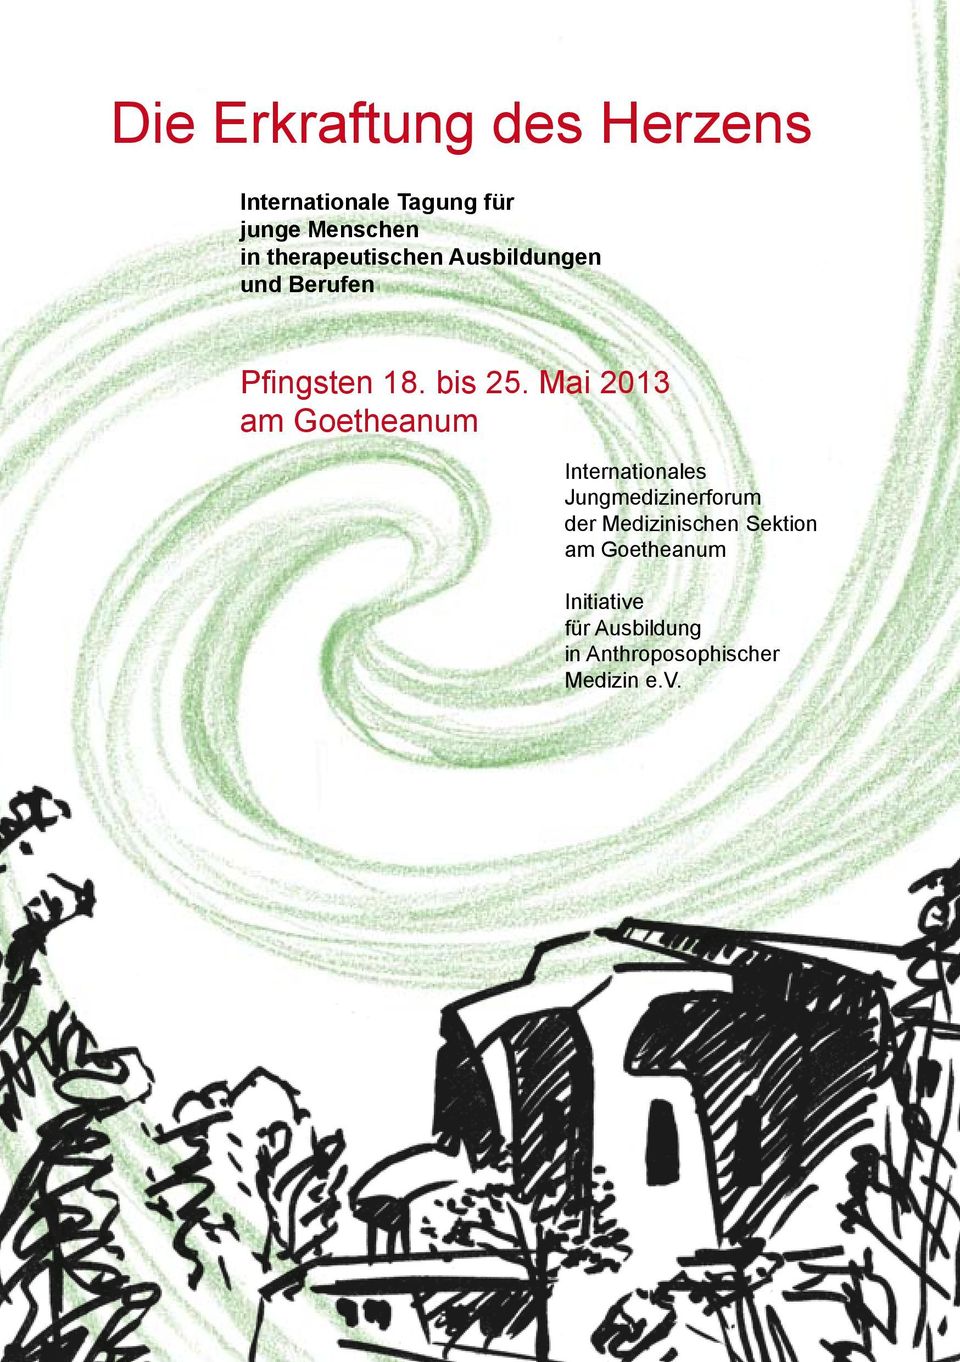 Mai 2013 am Goetheanum Internationales Jungmedizinerforum der